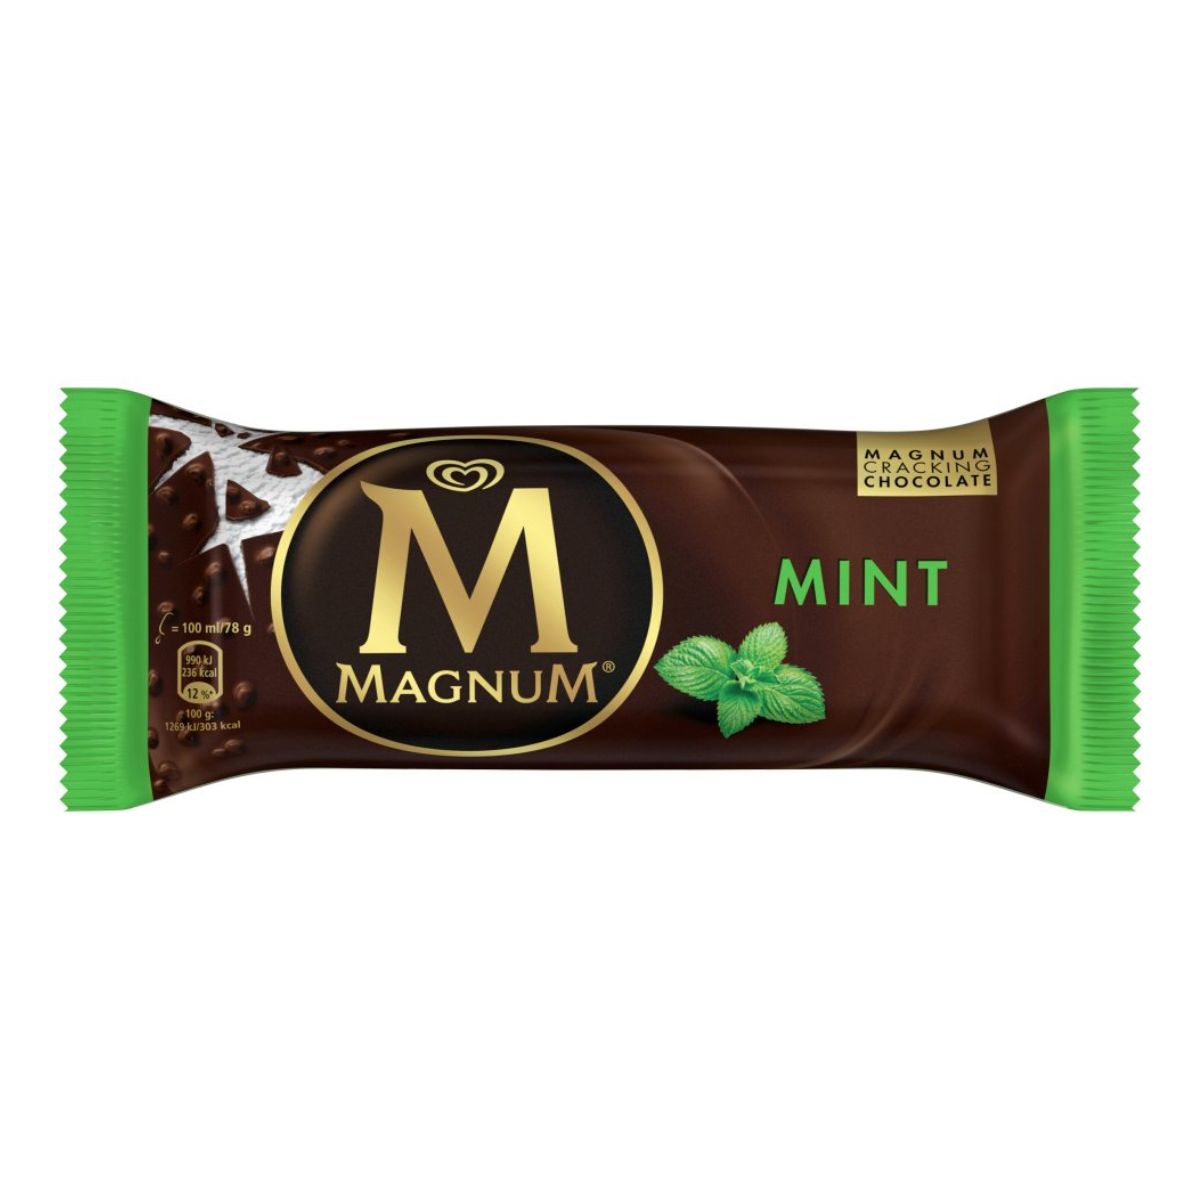 Magnum - Crackling Chocolate Mint - 78g mint chocolate bar.